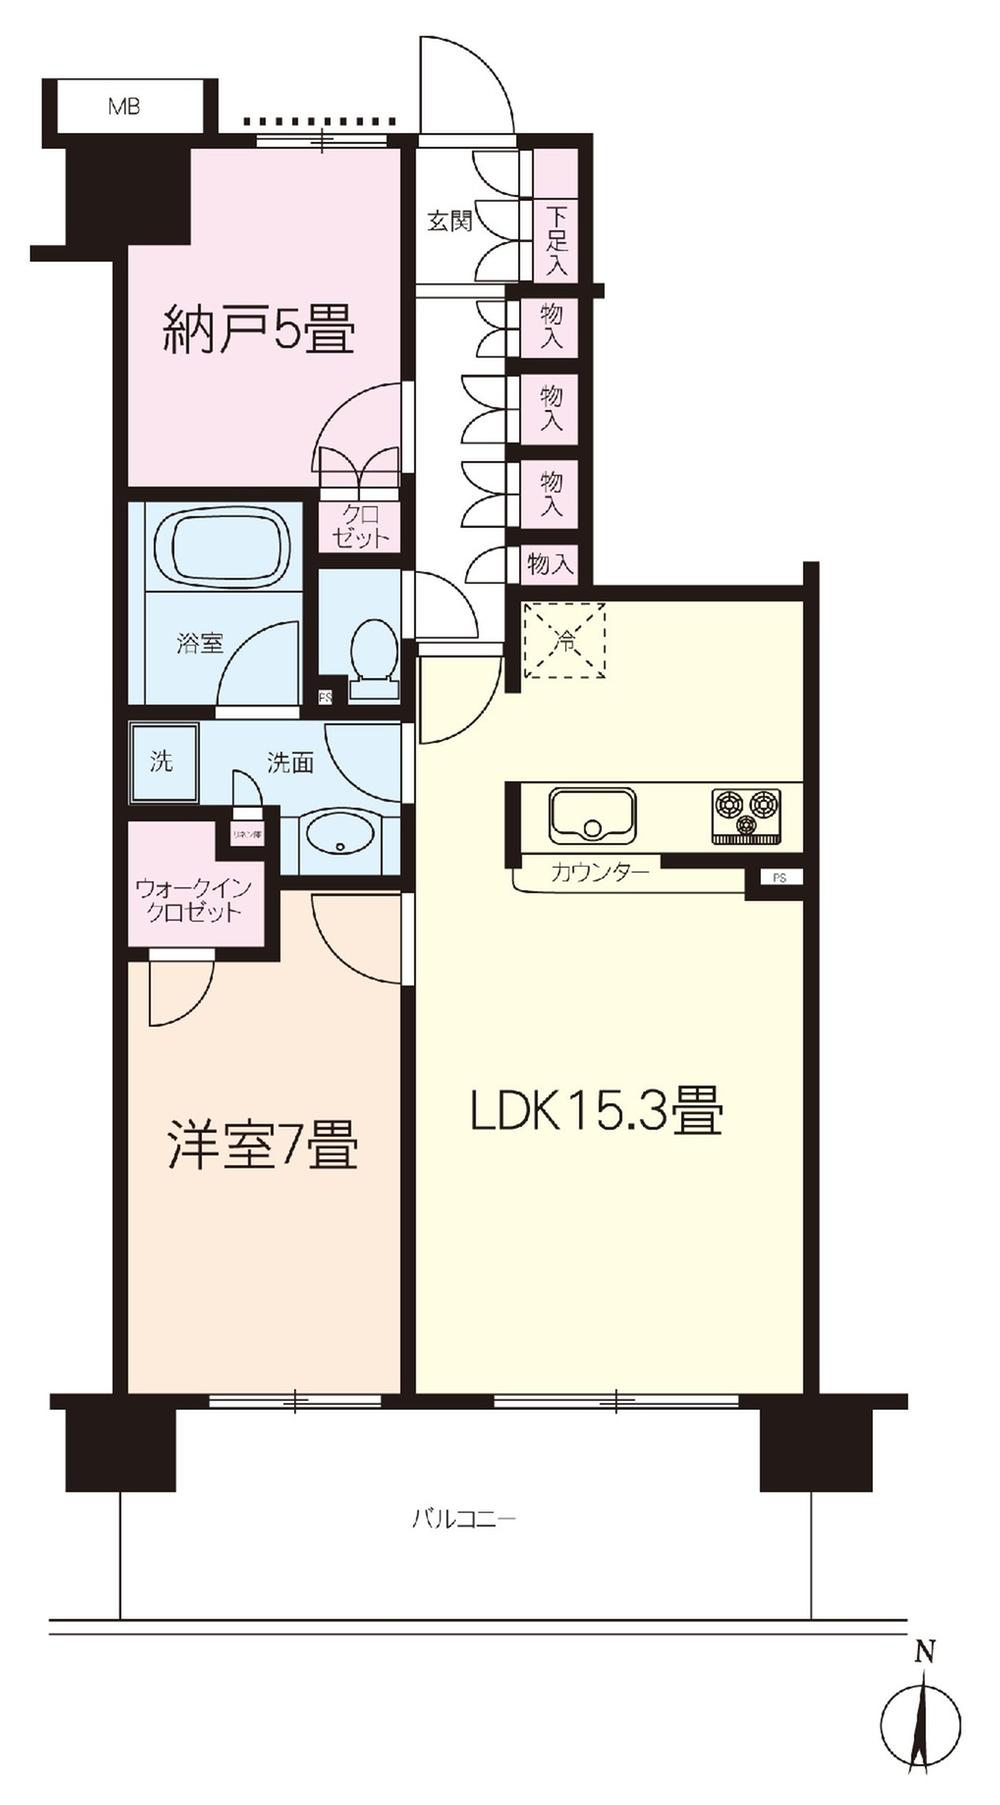 Floor plan. 1LDK + S (storeroom), Price 19 million yen, Occupied area 58.25 sq m , Balcony area 12.4 sq m